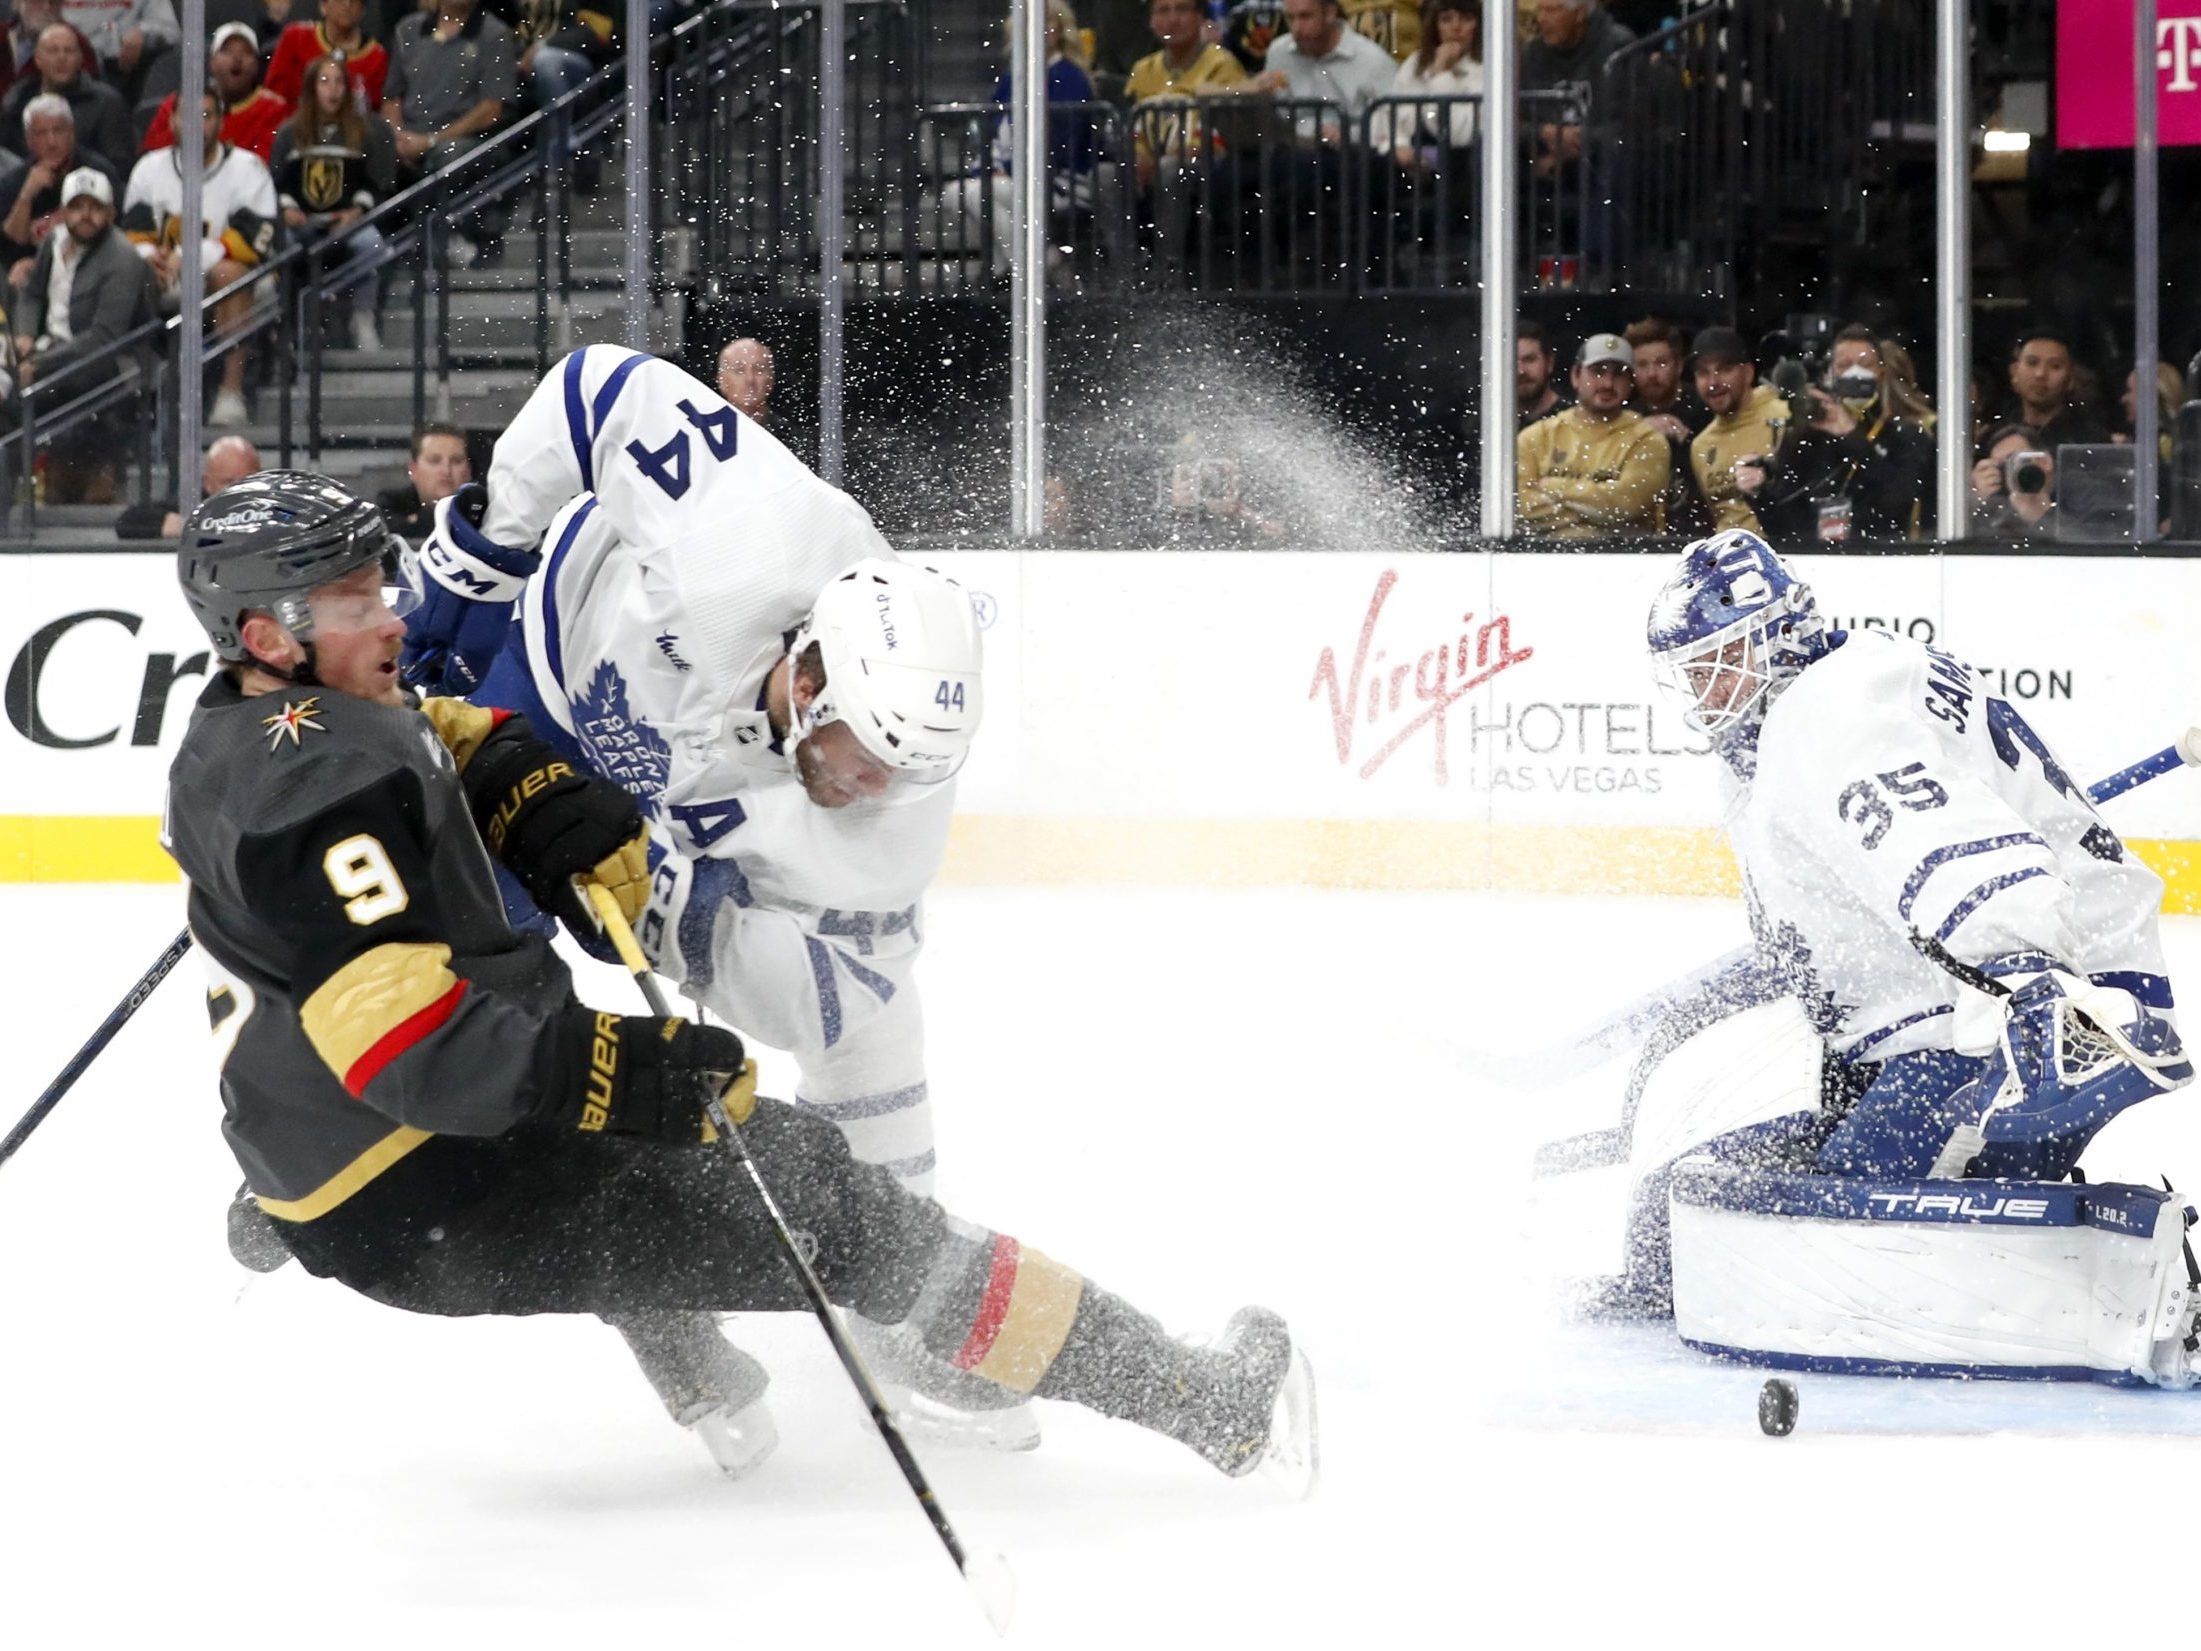 John Tavares scores in OT, Maple Leafs top Golden Knights